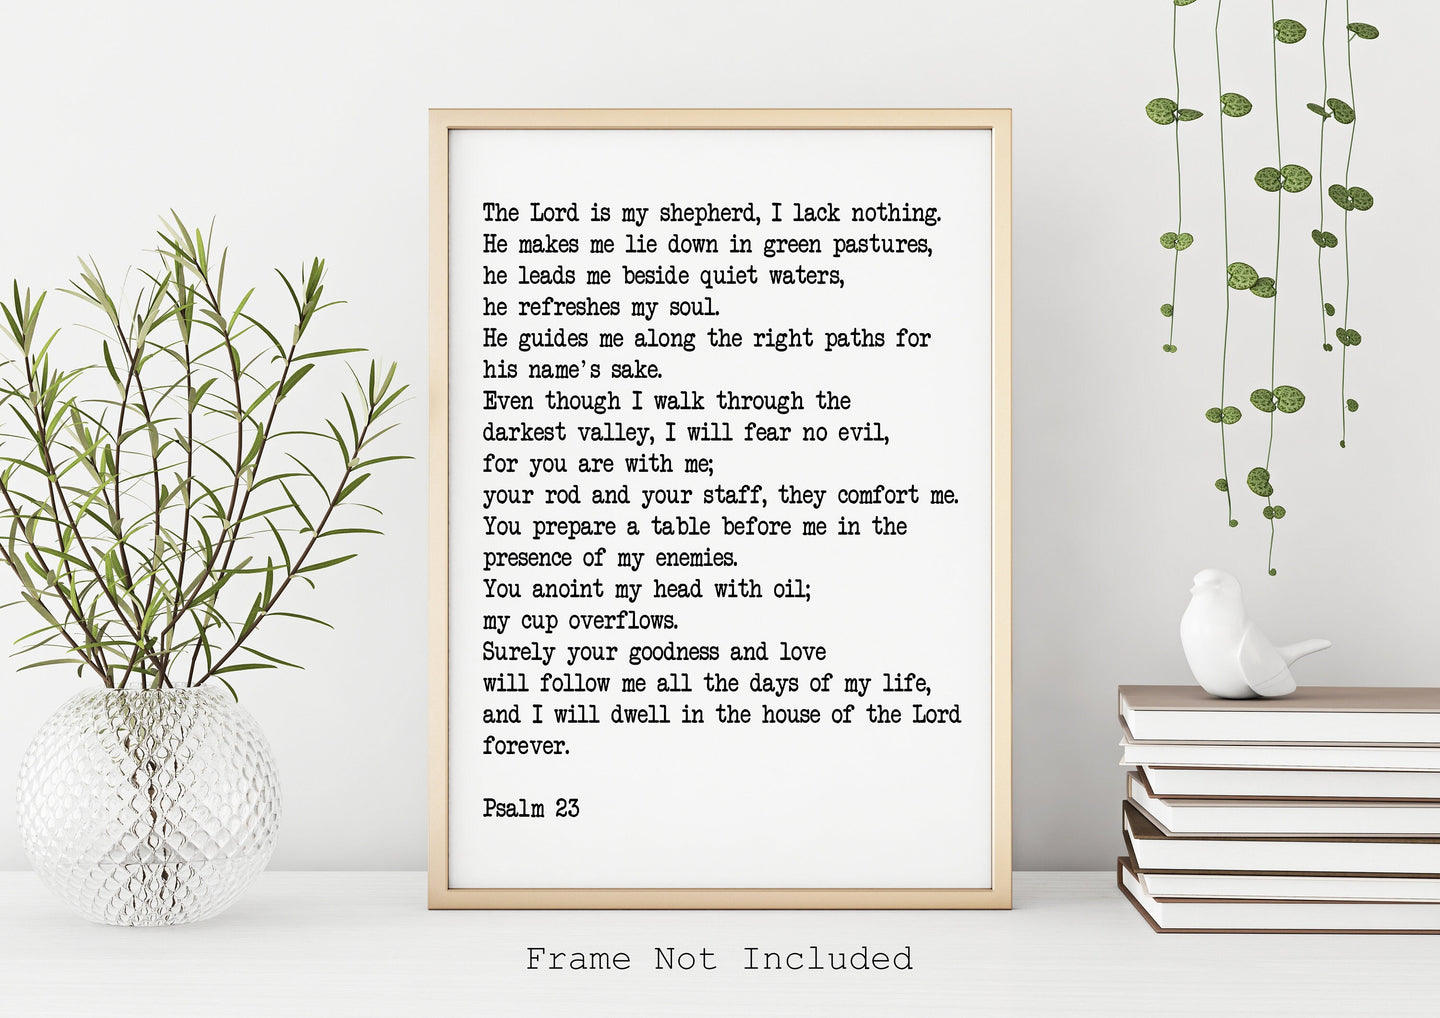 Psalm 23 bible verse wall art - The LORD is my shepherd